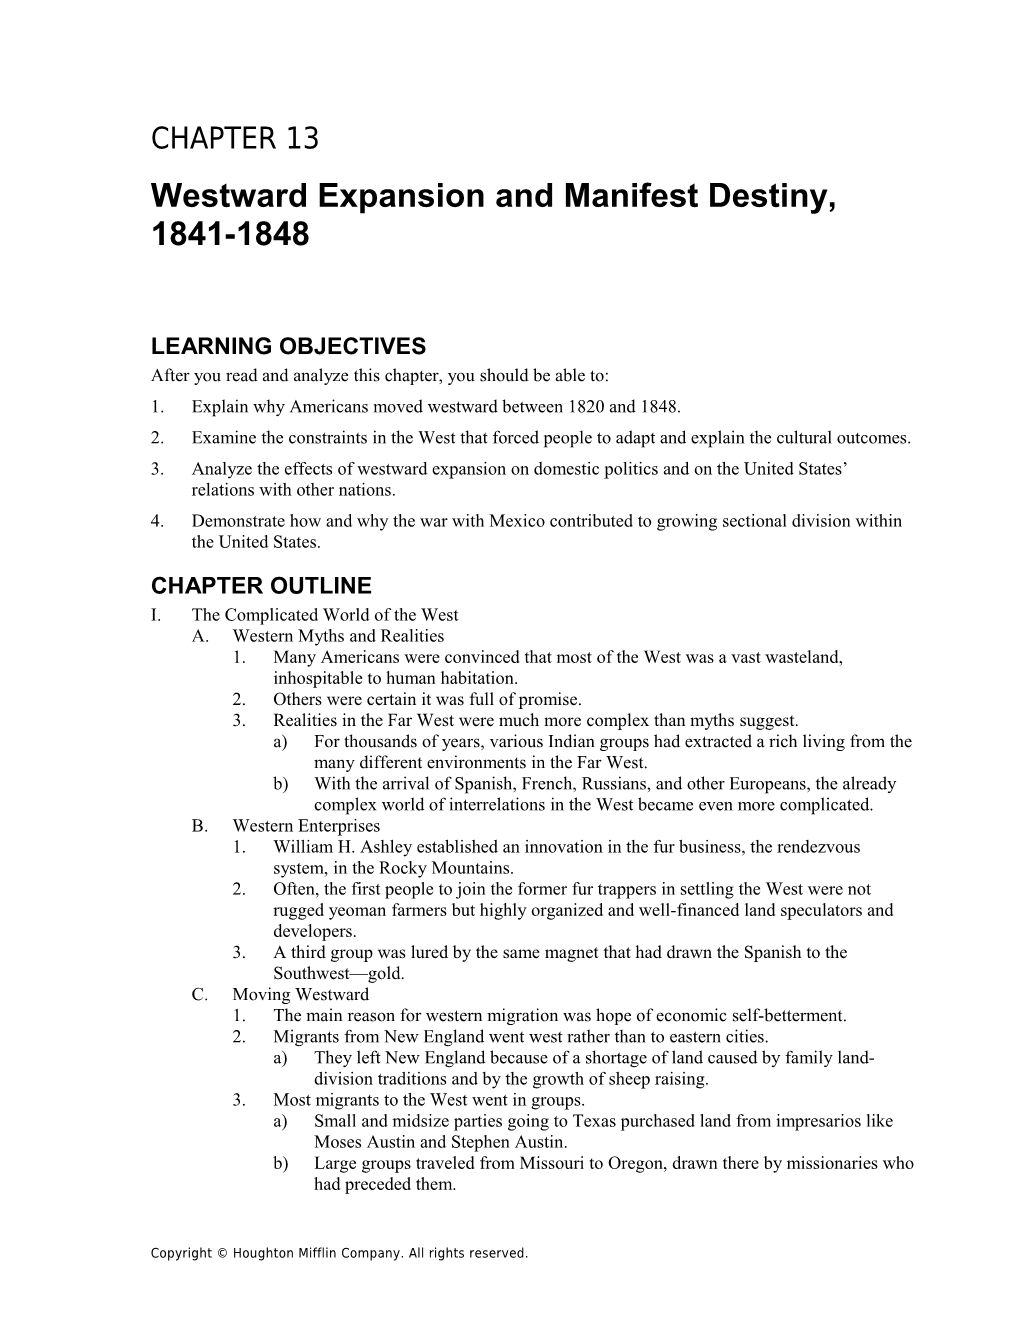 Chapter 13: Westward Expansion and Manifest Destiny, 1841-1848 1